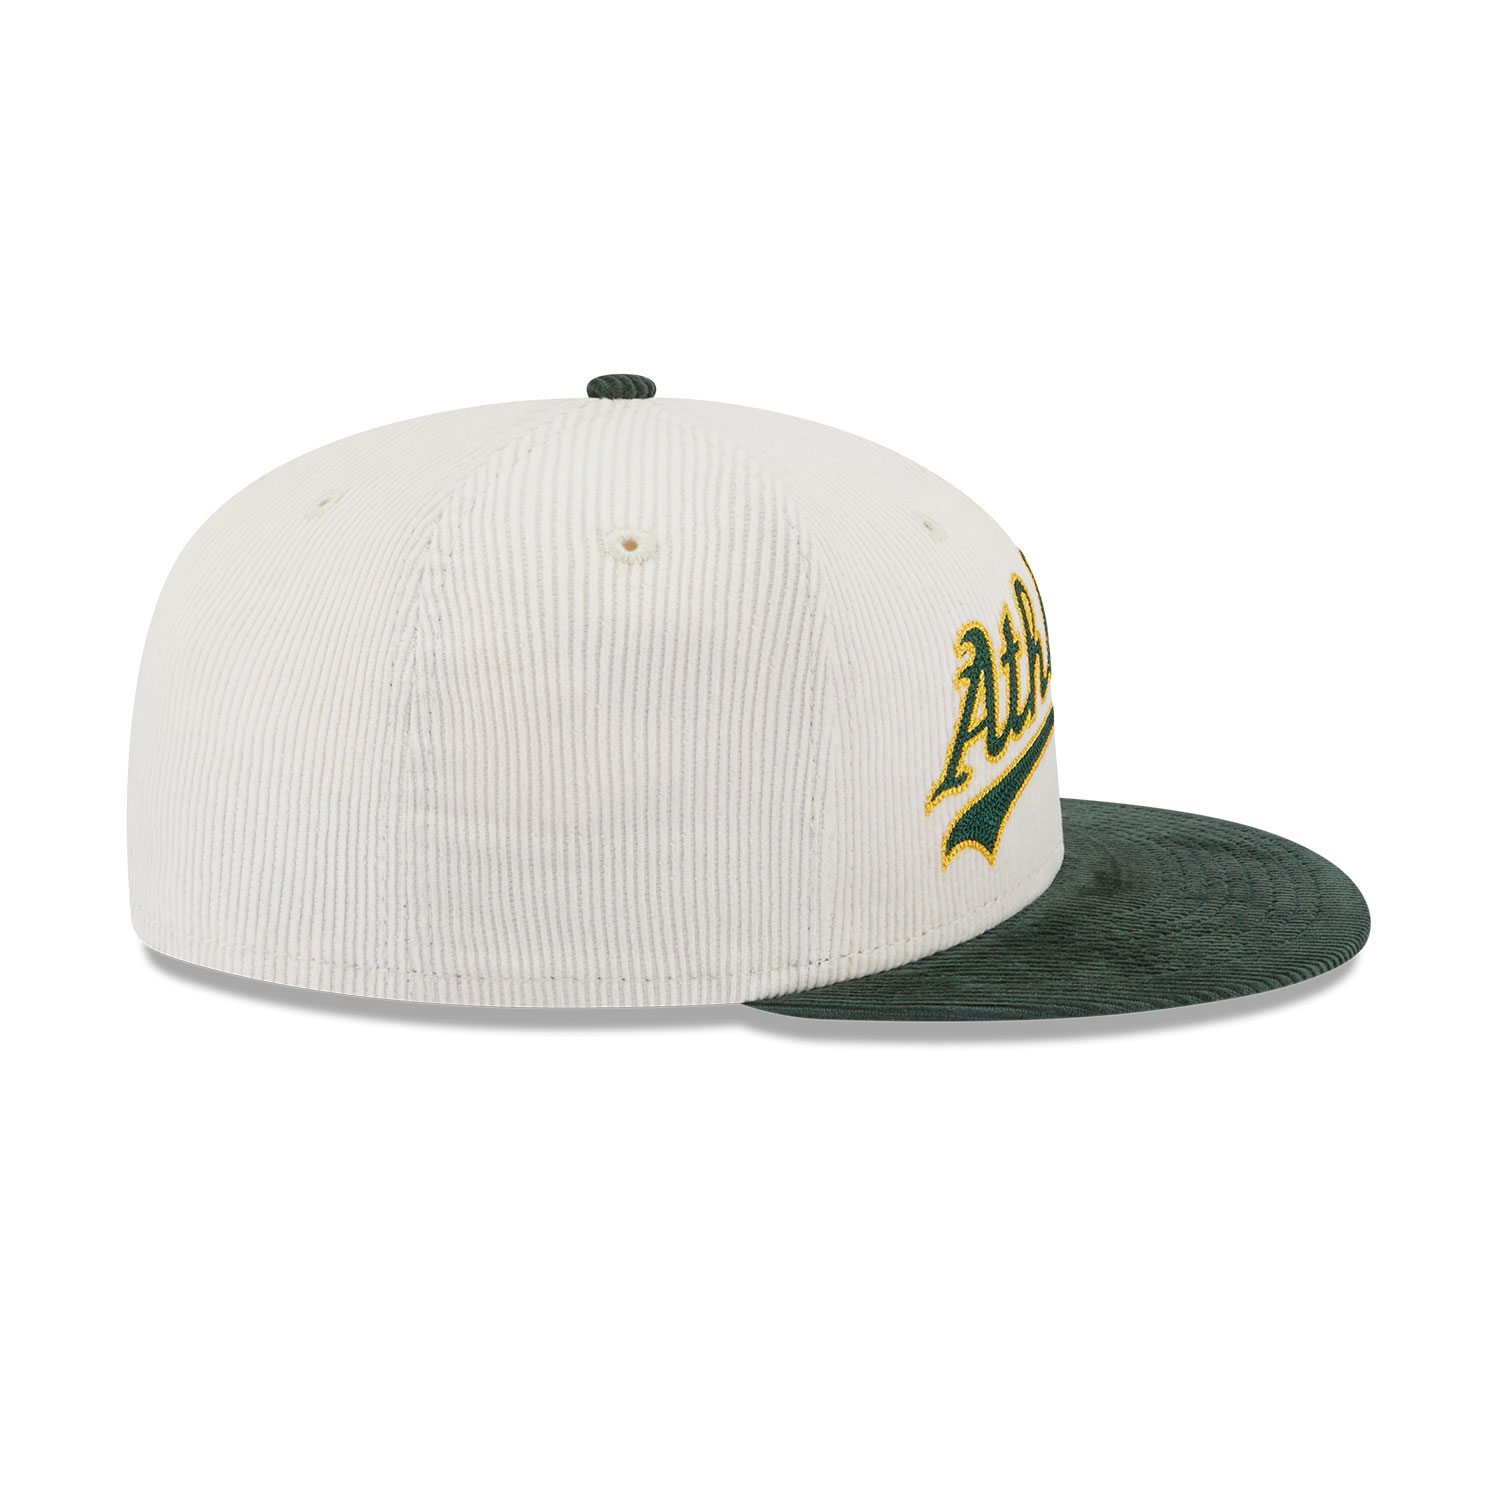 oakland athletics vintage cap